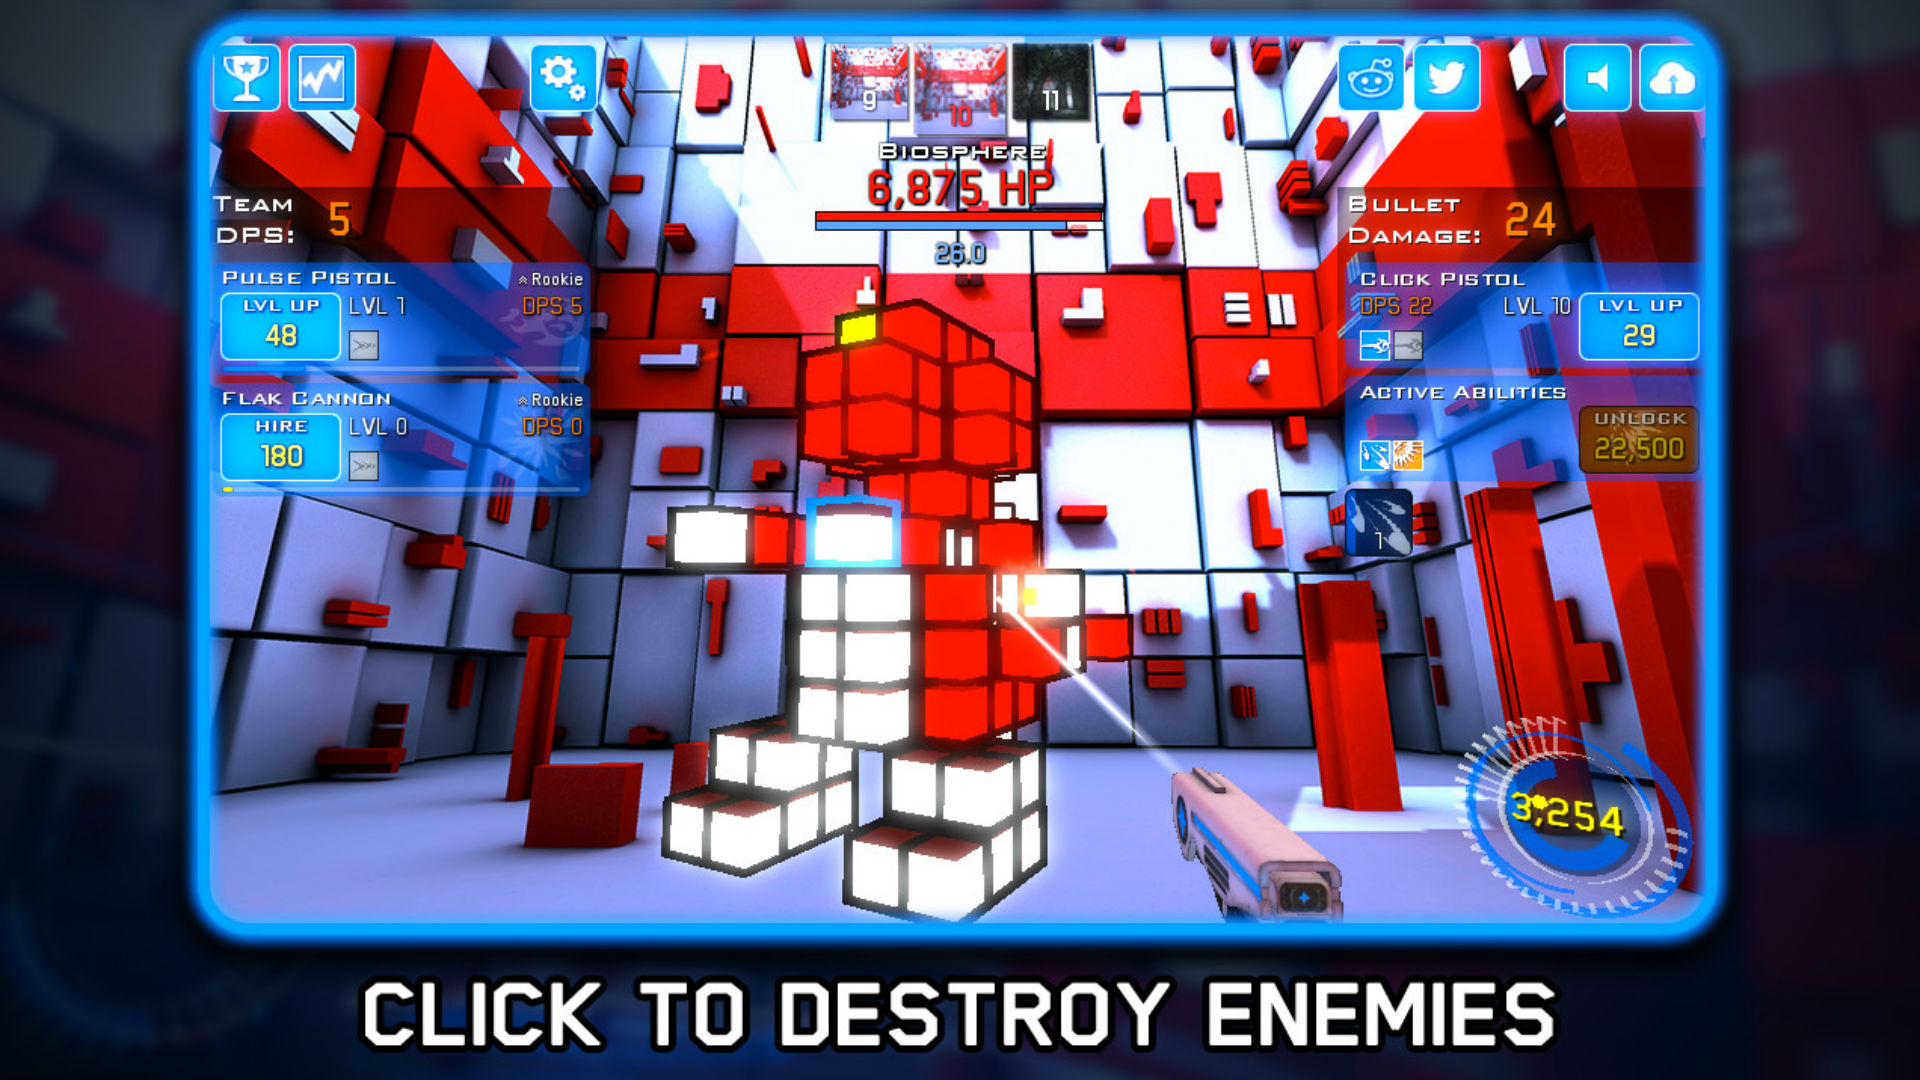 idle games time clickers - image shows a gun shooting at blocks.